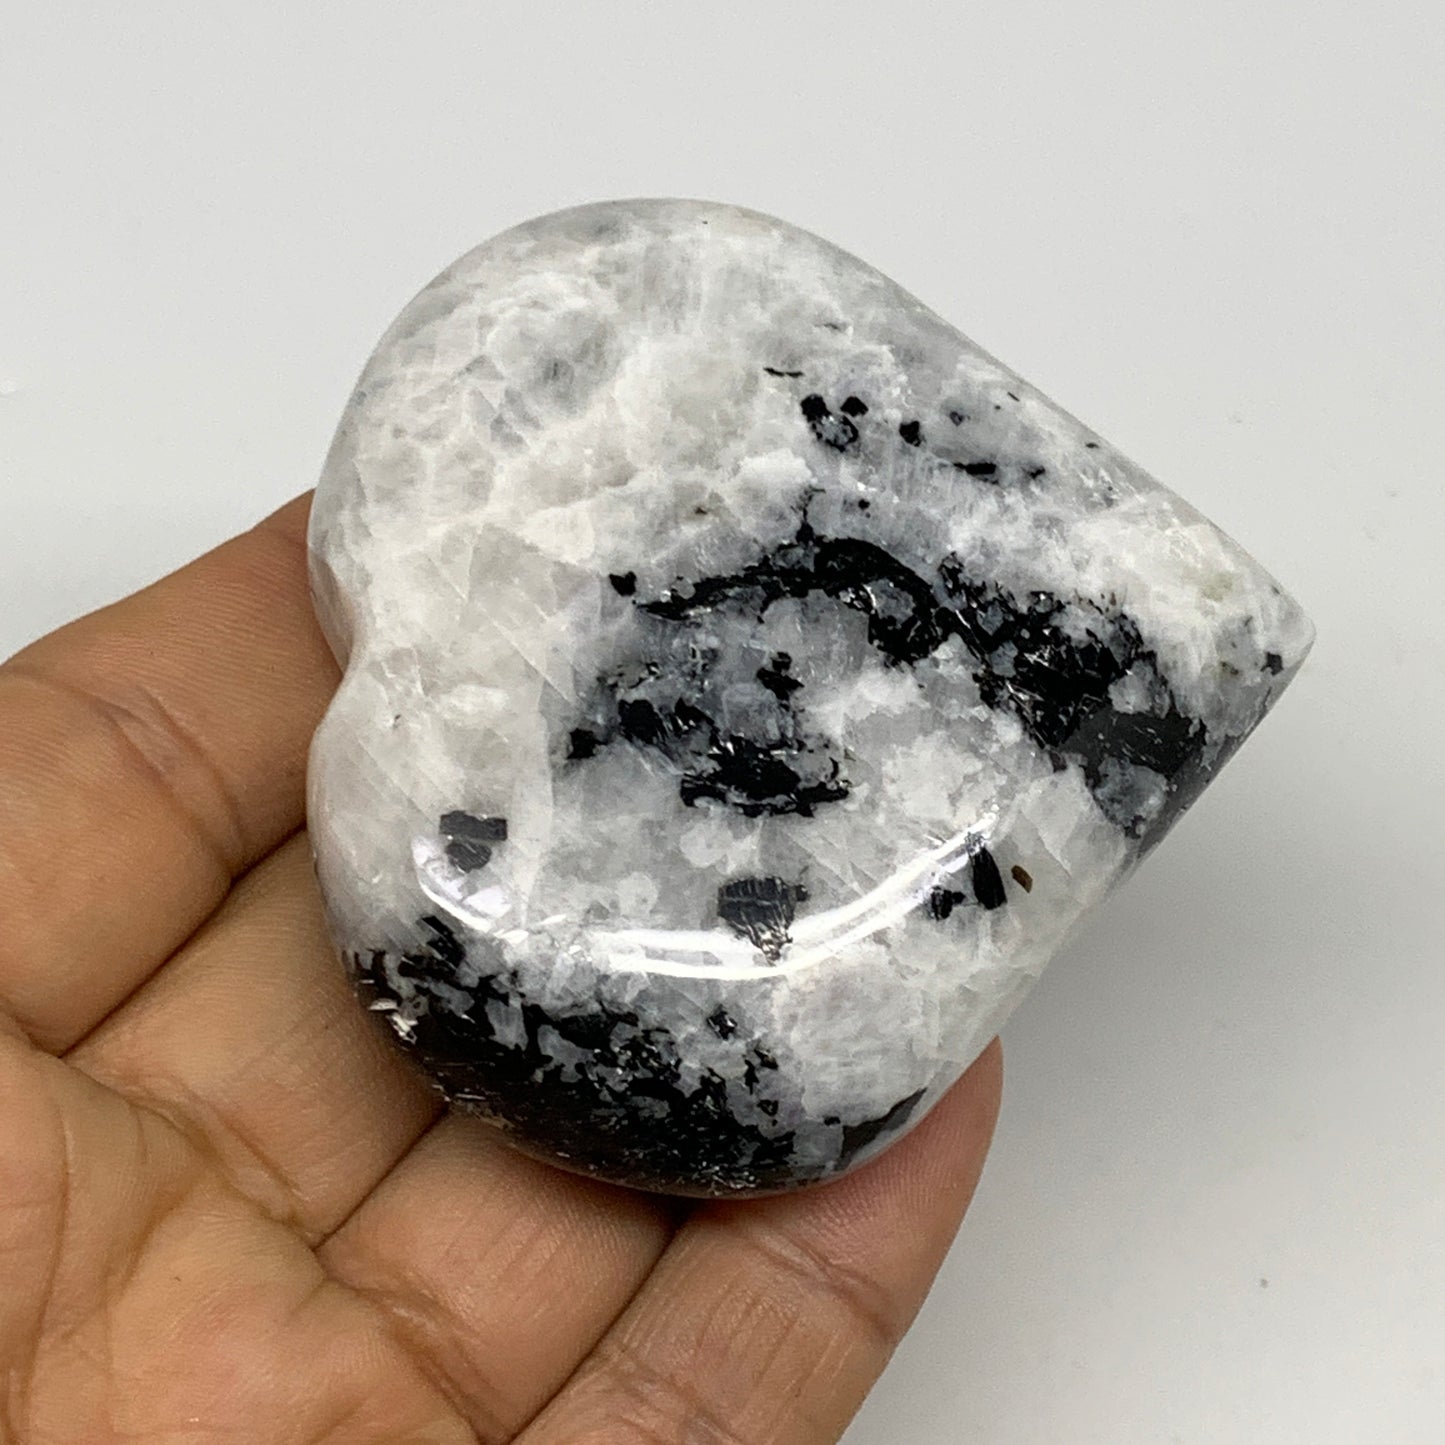 121.6g, 2.5"x2.6"x0.8", Rainbow Moonstone Heart Crystal Gemstone @India, B29751